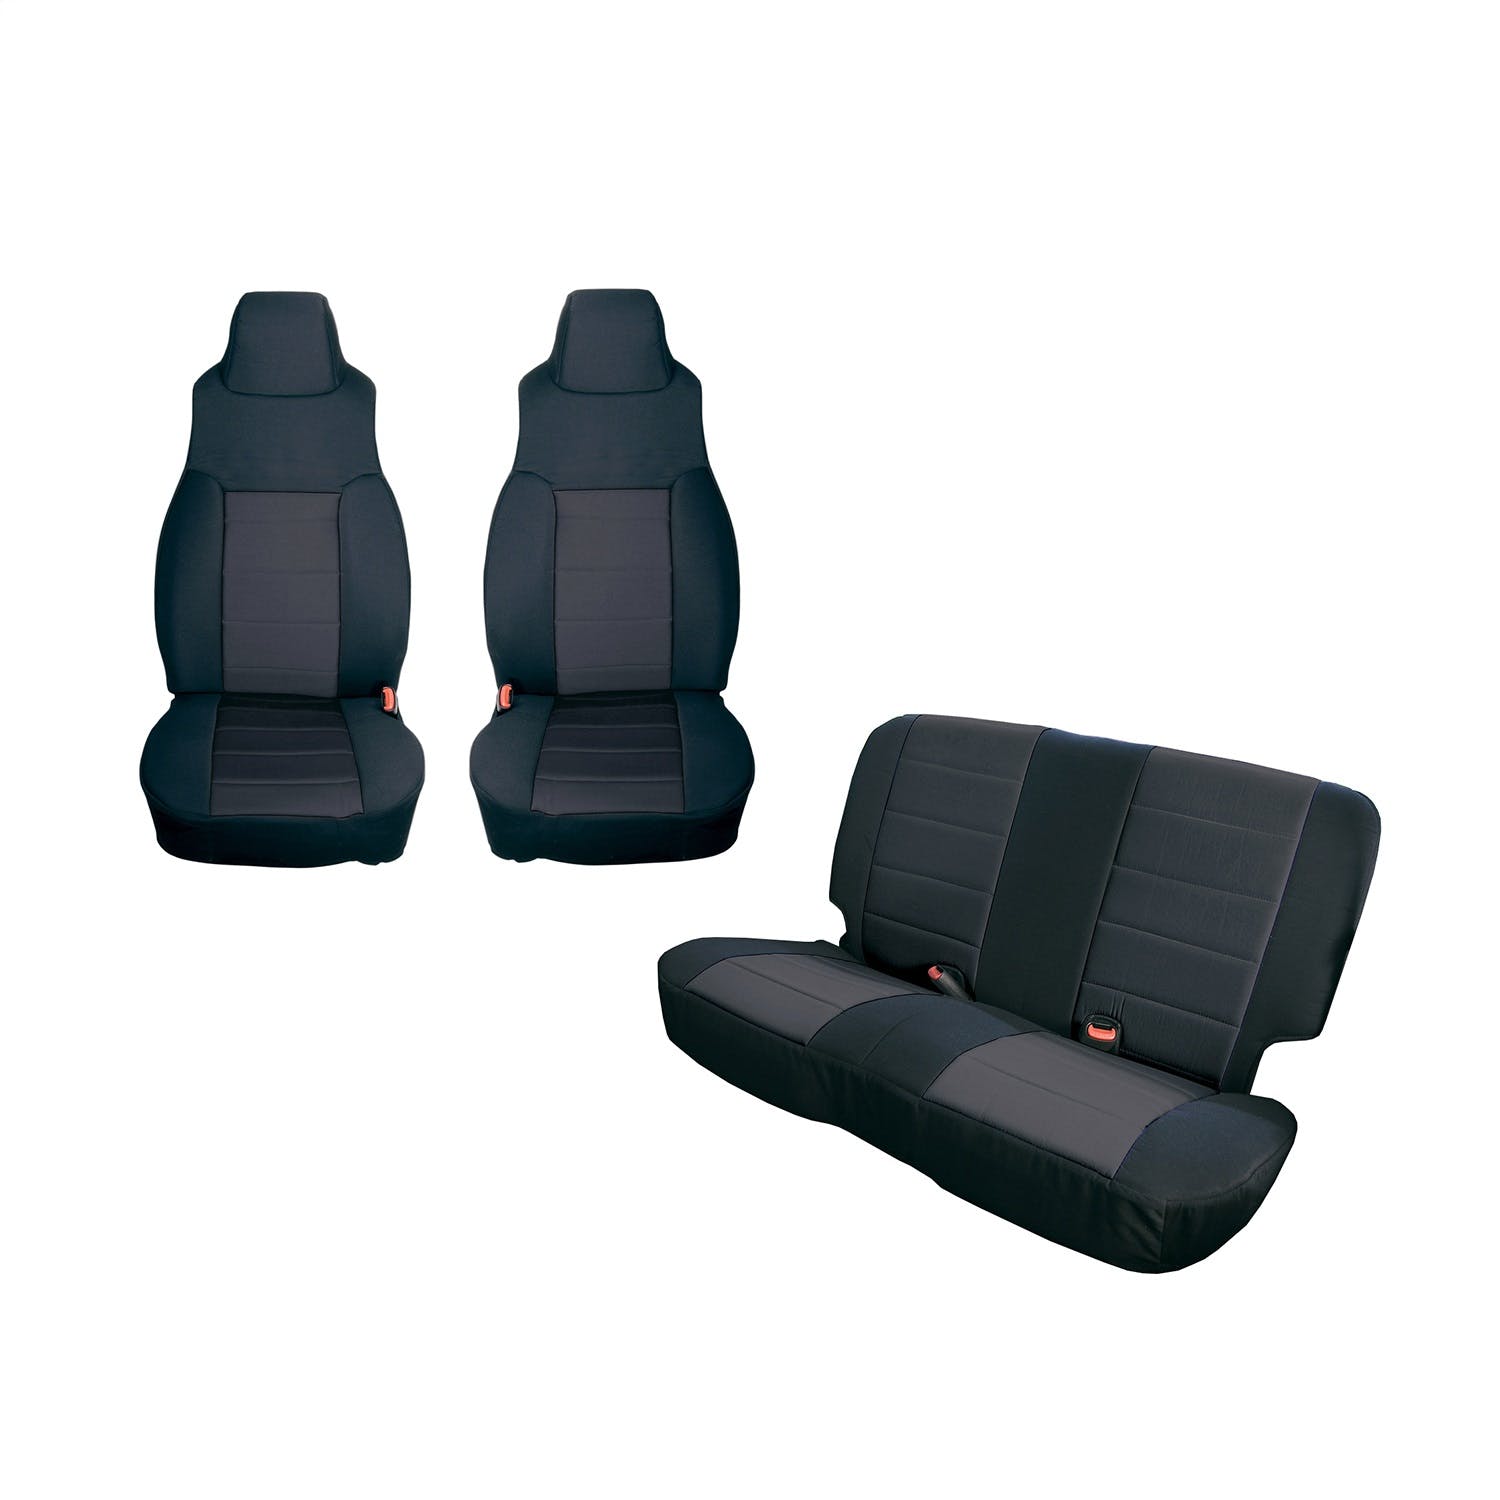 Rugged Ridge 13291.01 Seat Cover Kit, Black